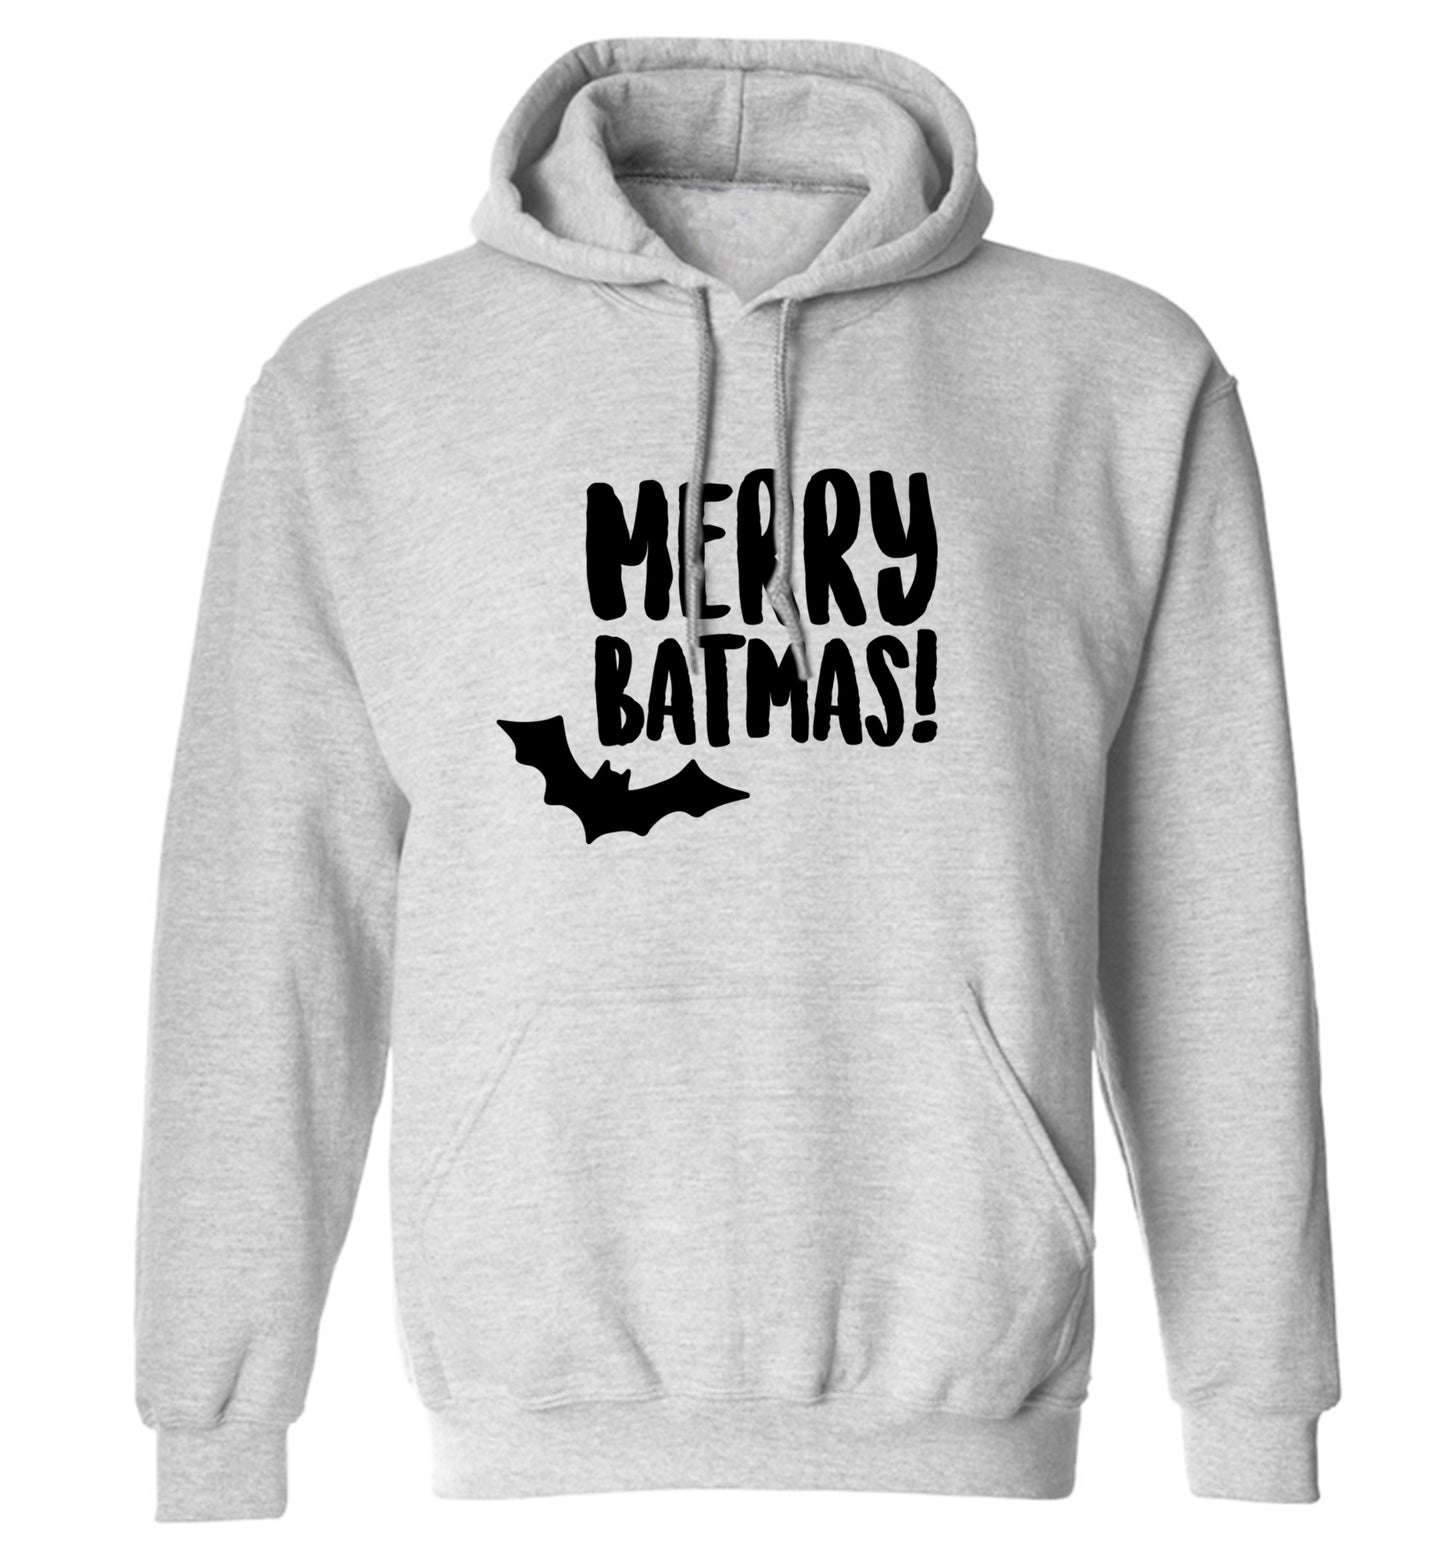 Merry Batmas adults unisex grey hoodie 2XL